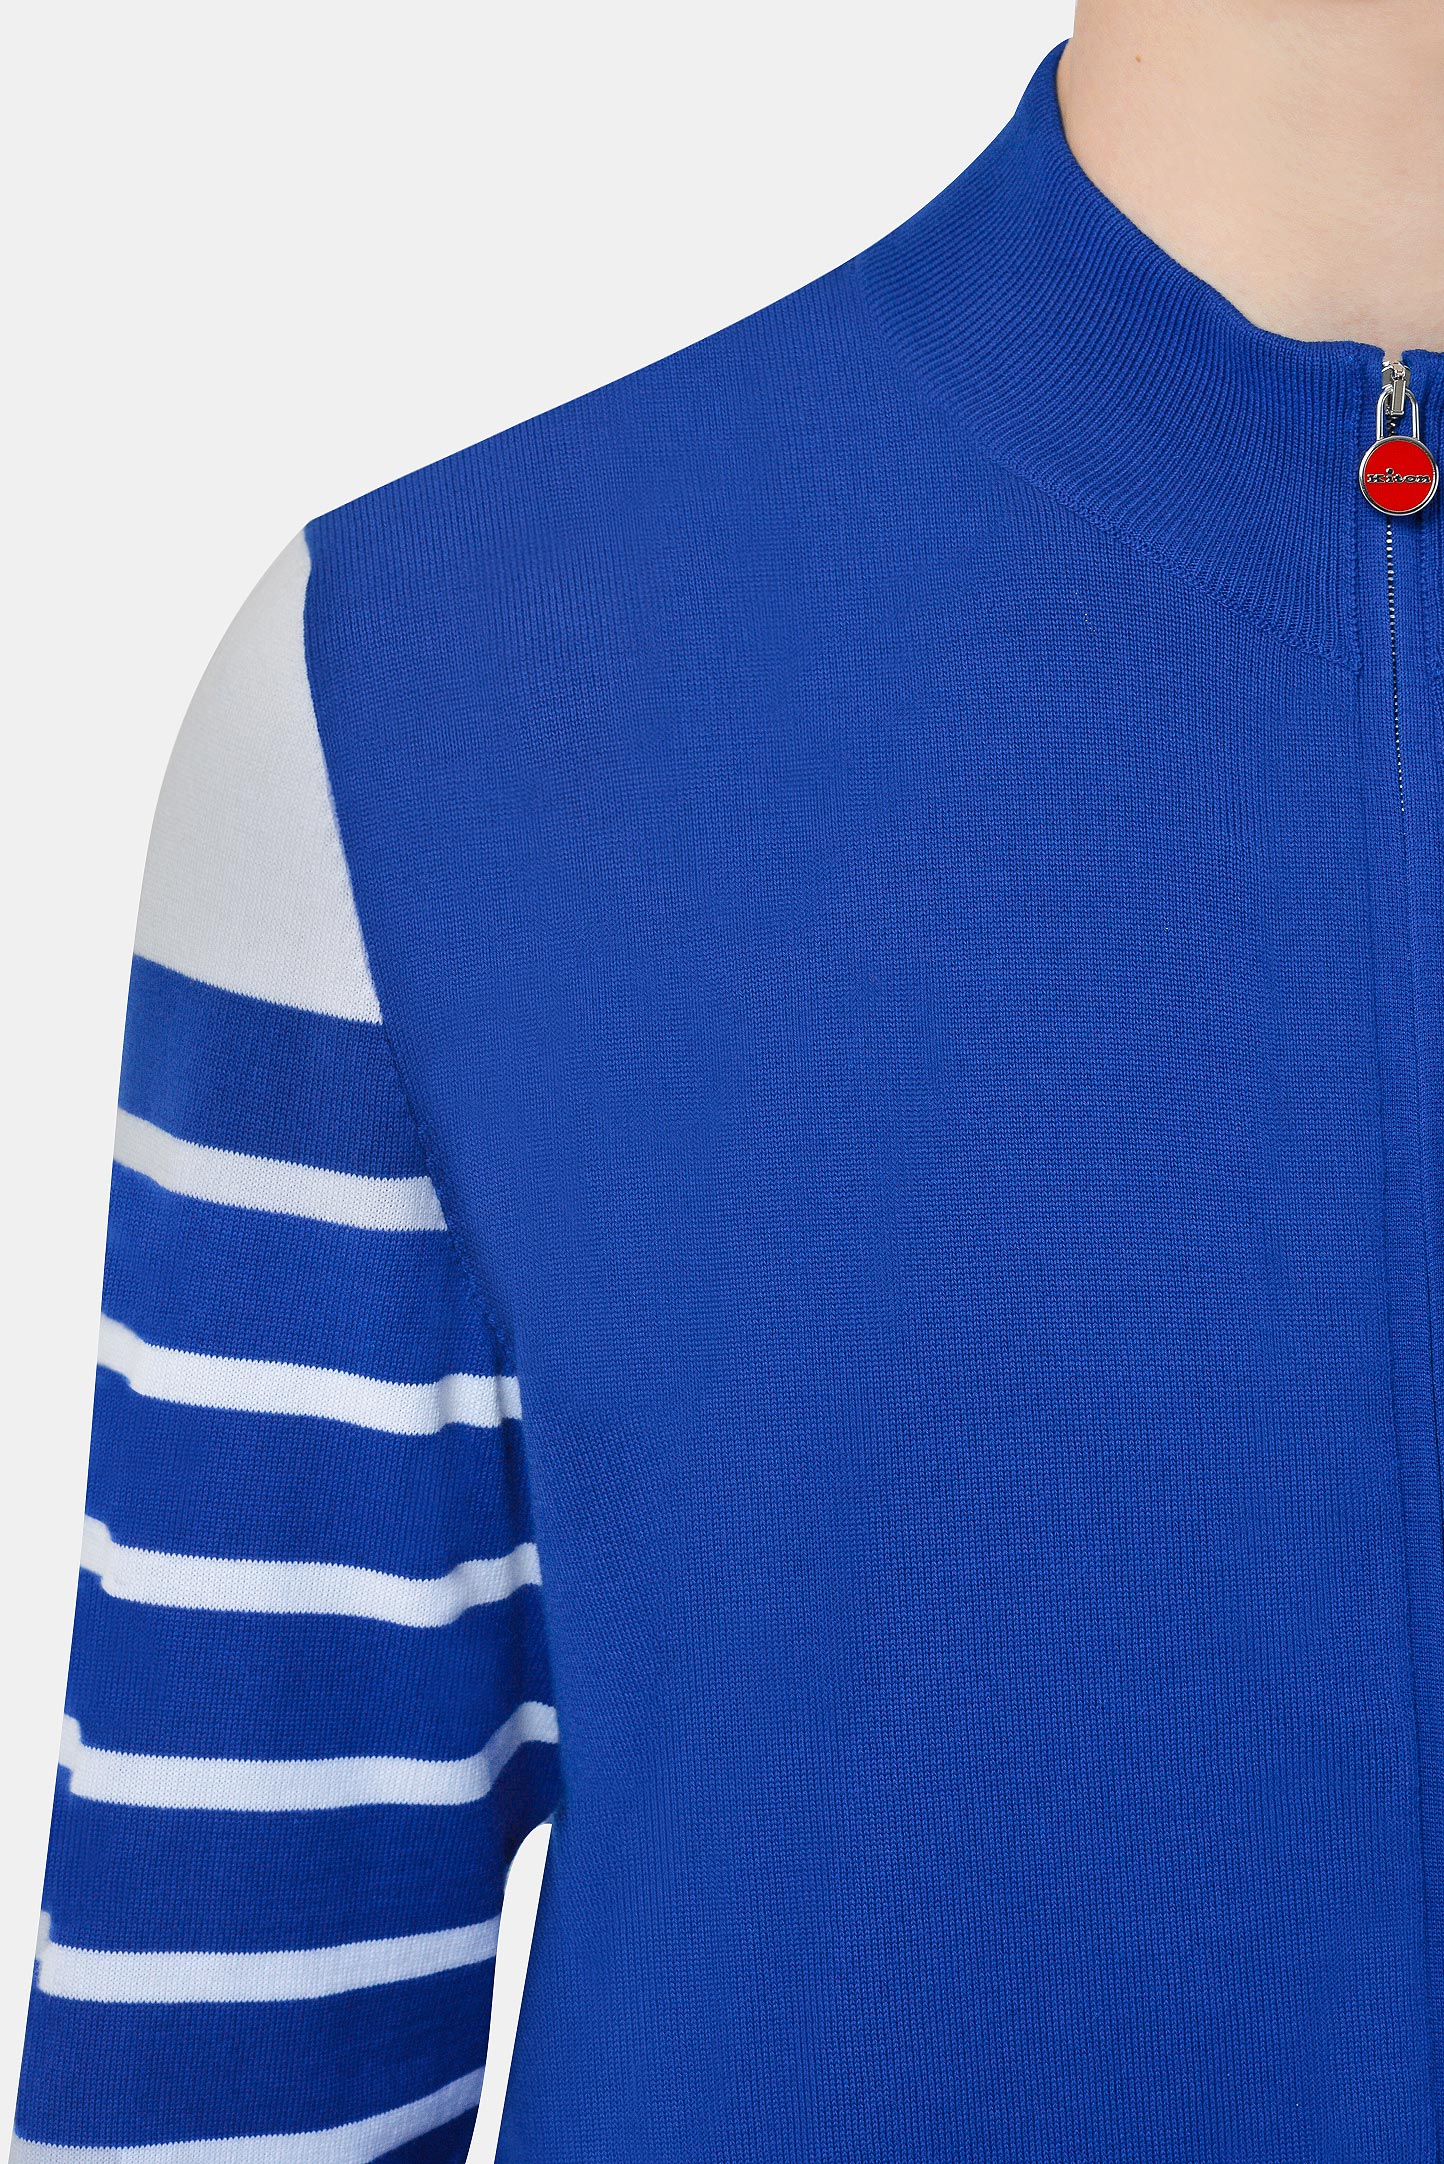 Куртка спорт KITON UK1260E21V24, цвет: Синий, Мужской